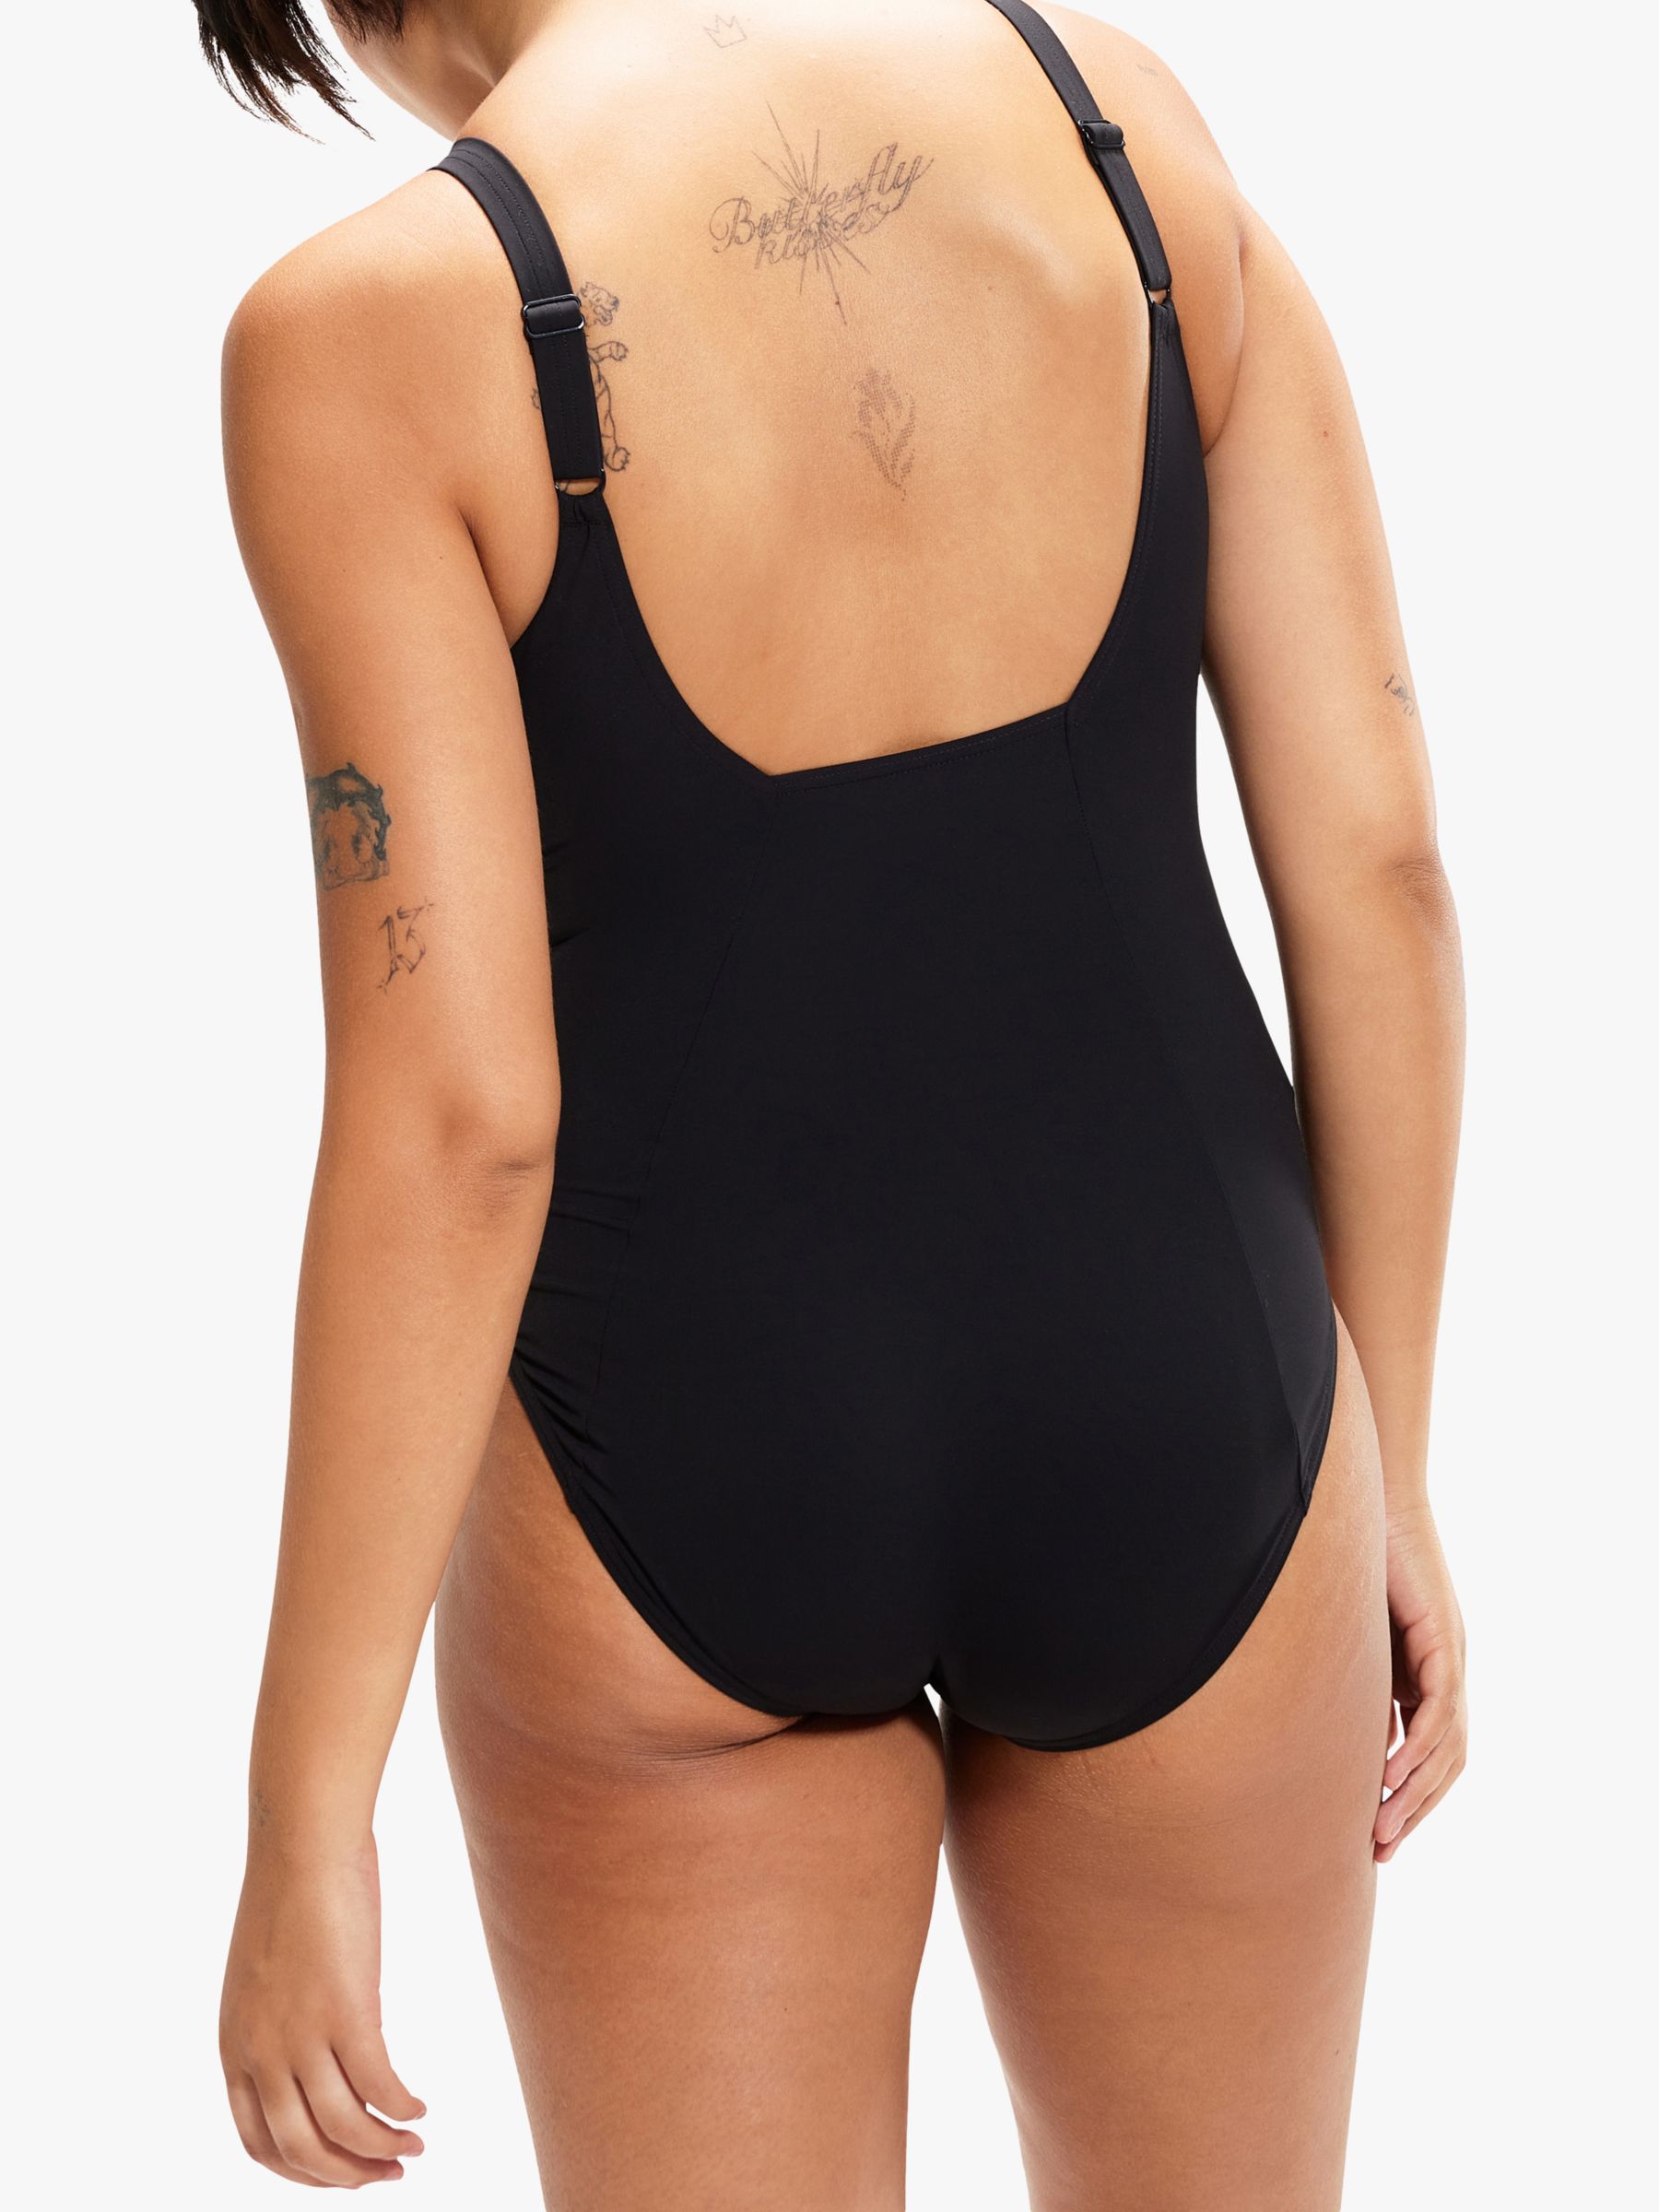 Speedo Shaping ContourEclipse Swimsuit, Black/White, 40